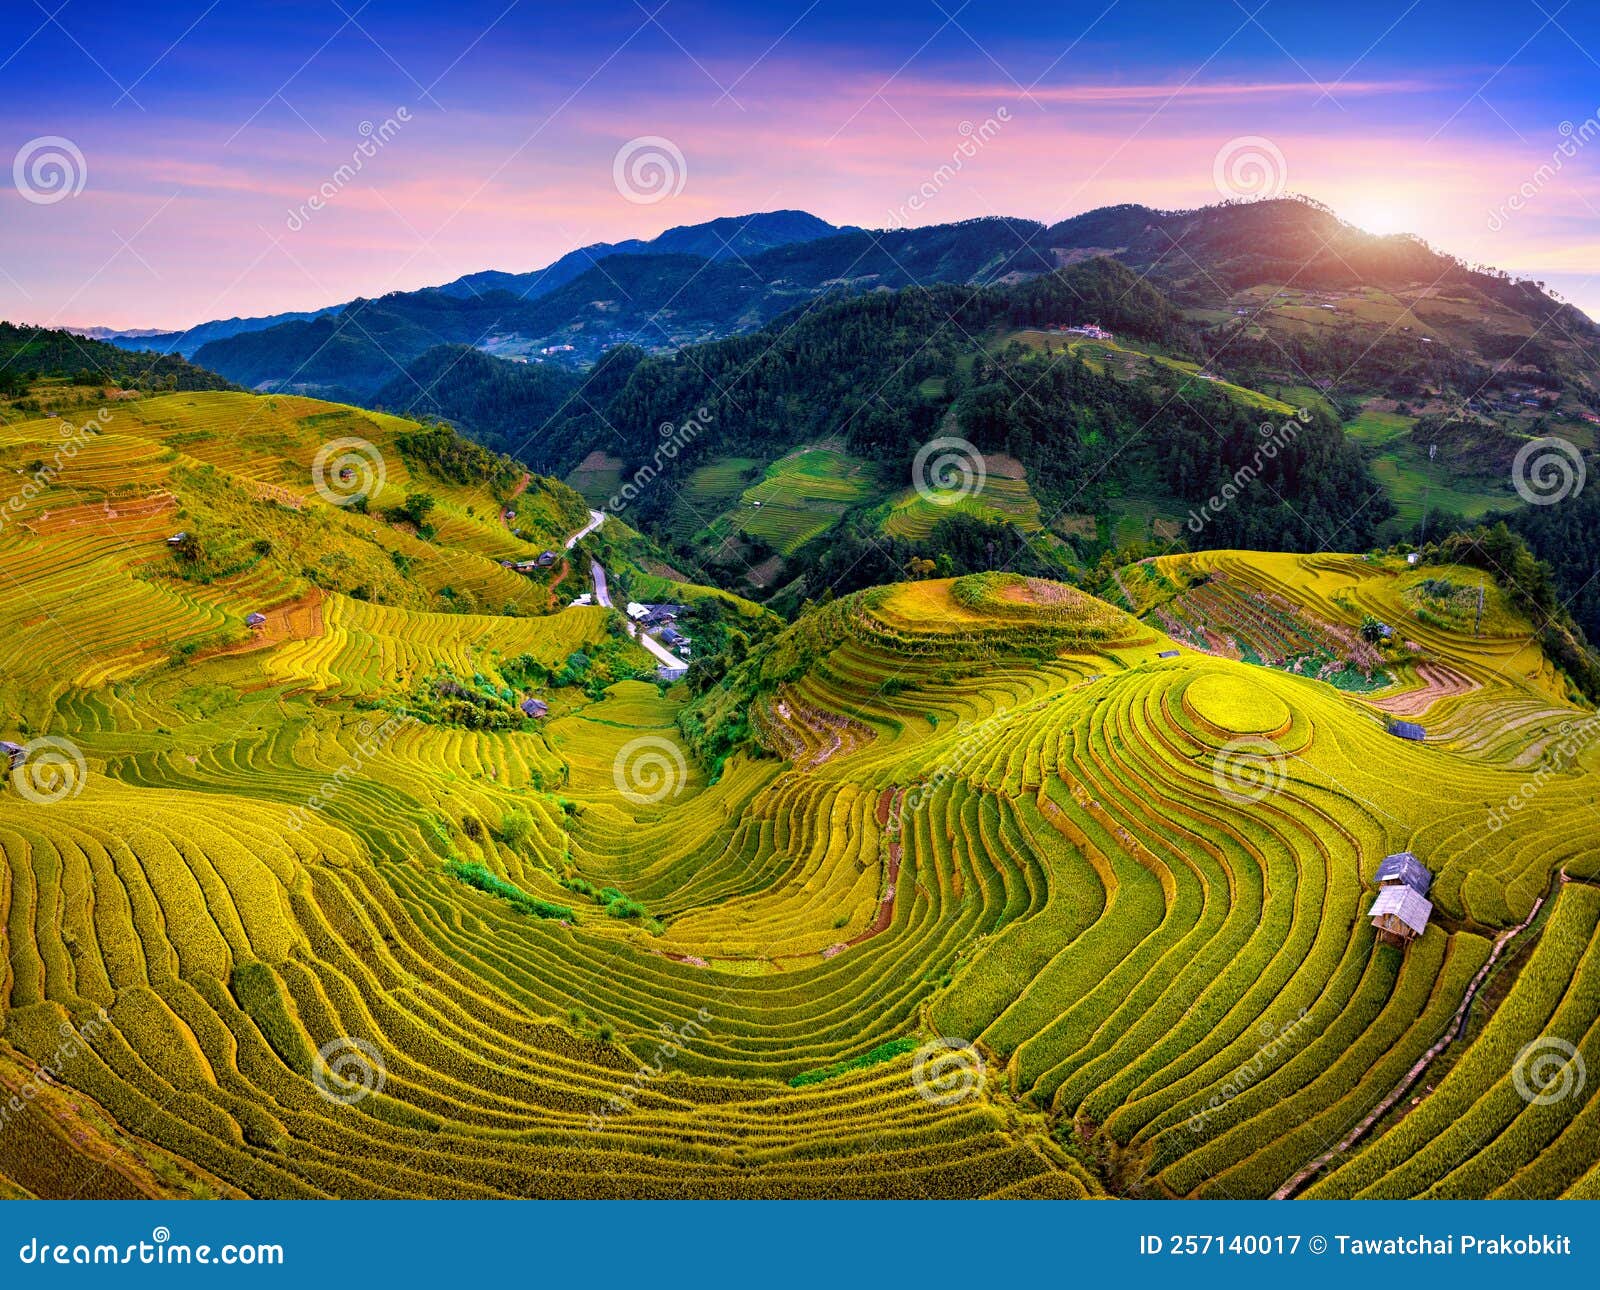 aerial view of rice terraces at mam xoi viewpoint in mu cang chai, vietnam.